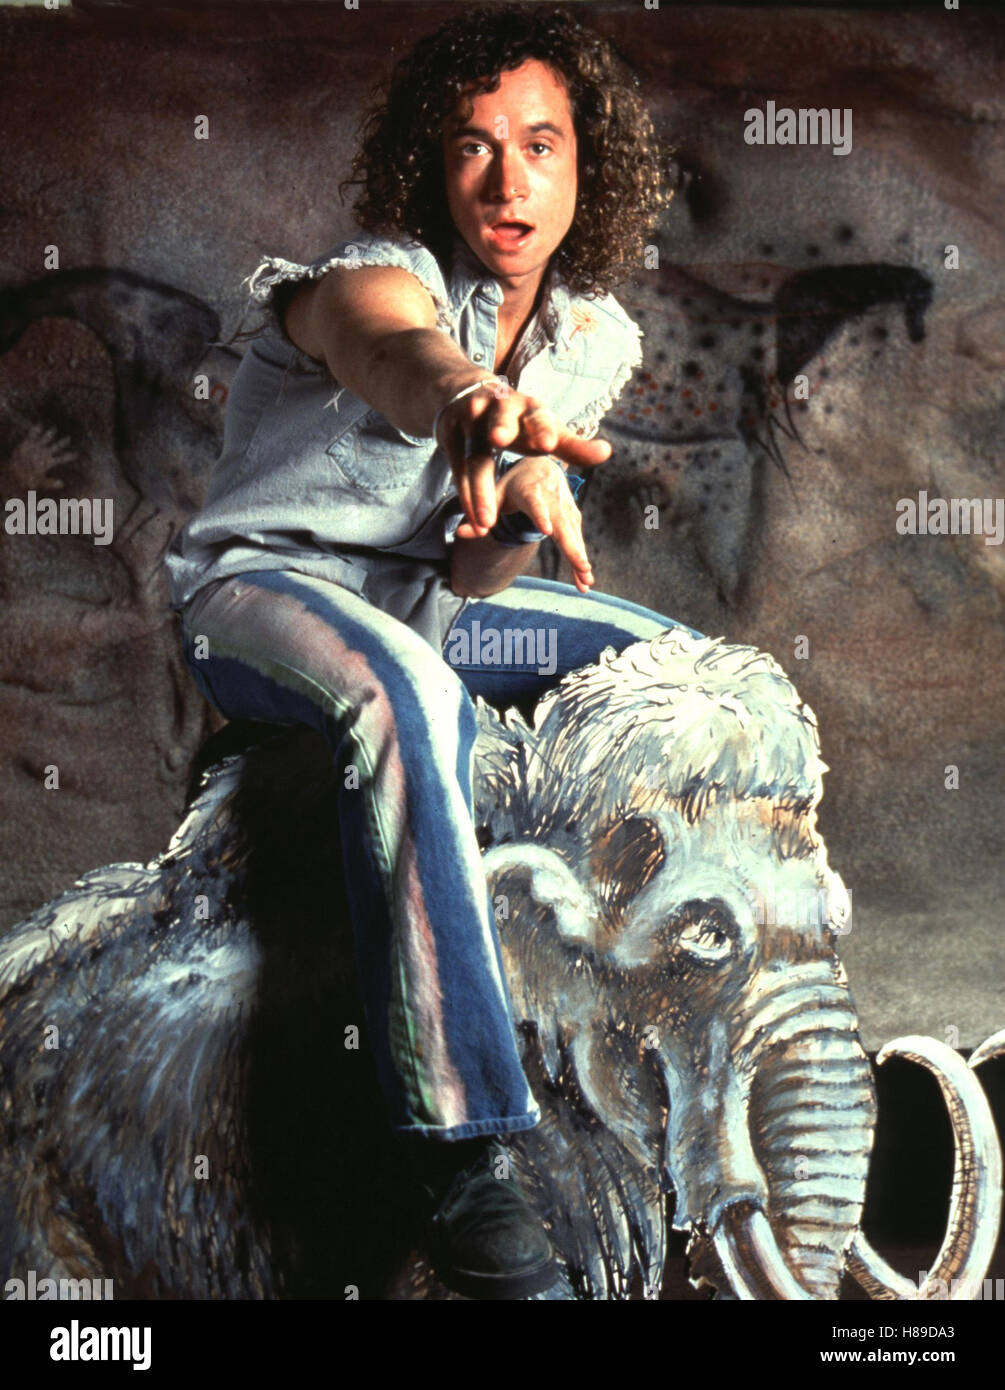 Junior Steinzeit, (hombre de Encino / HOMBRE DE CALIFORNIA) USA 1992, Regie: Les Mayfield, Pauly Shore, Stichwort: Elefante Foto de stock